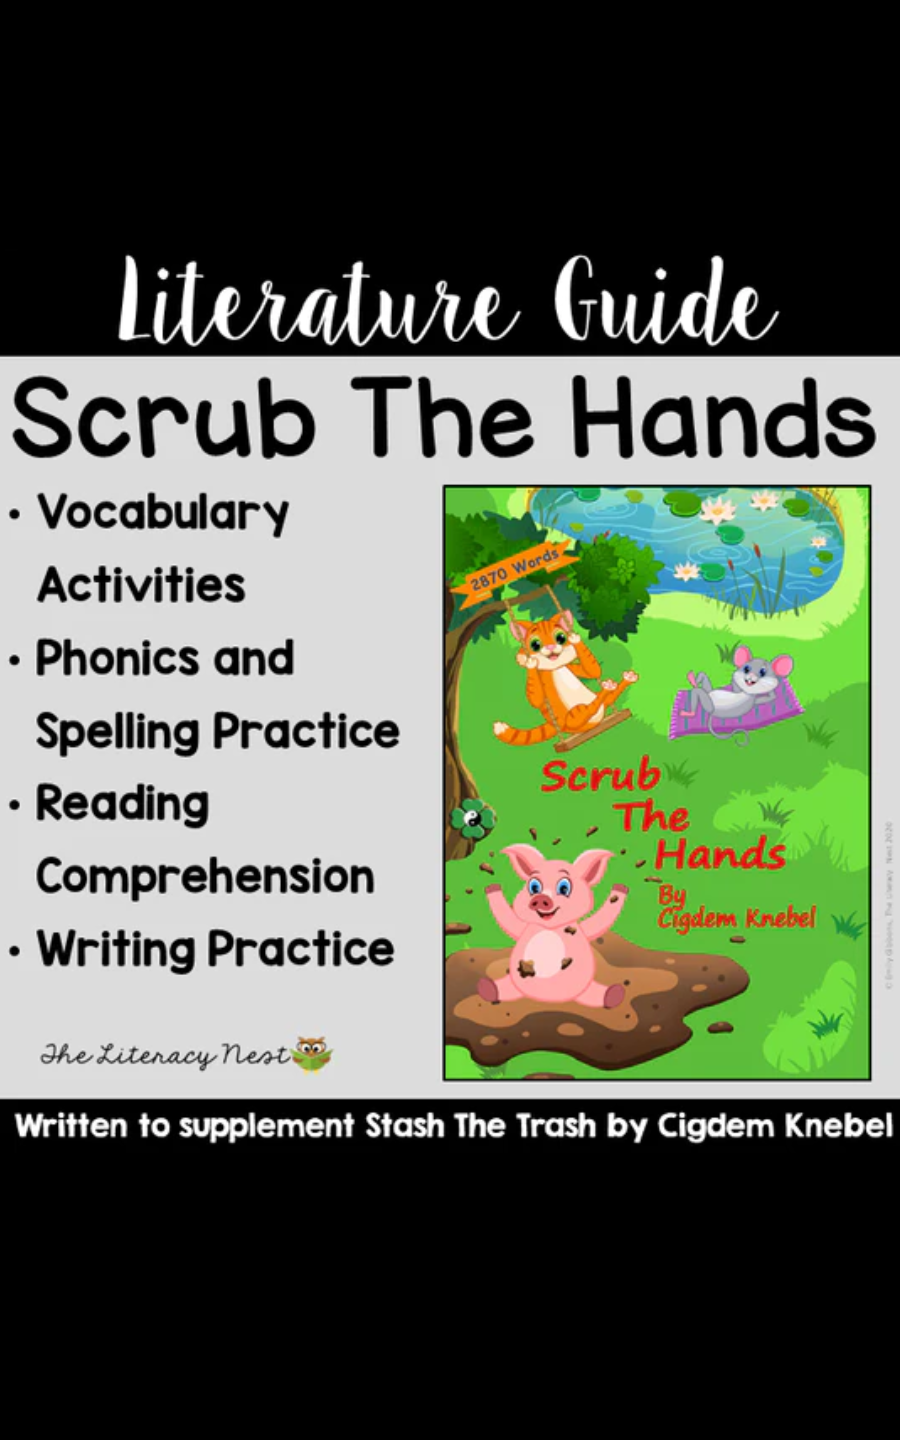 Literature Guide: Scrub The Hands